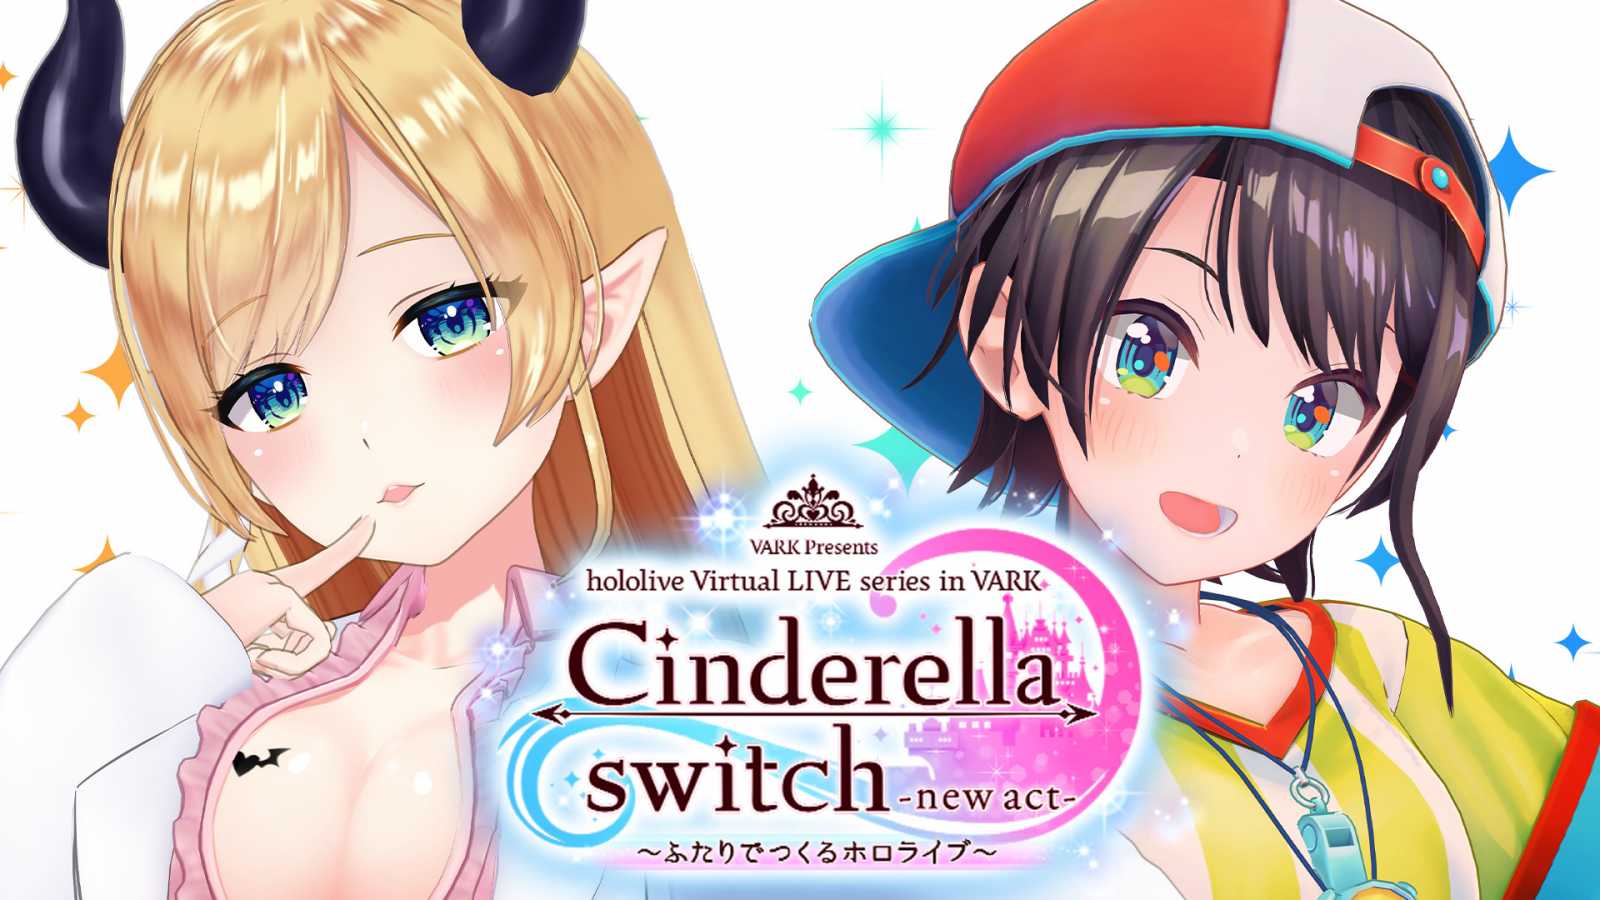 Yuzuki Choco and Oozora Subaru to Headline New "Cinderella Switch" Concert © VARK / Cover Corp. All rights reserved.